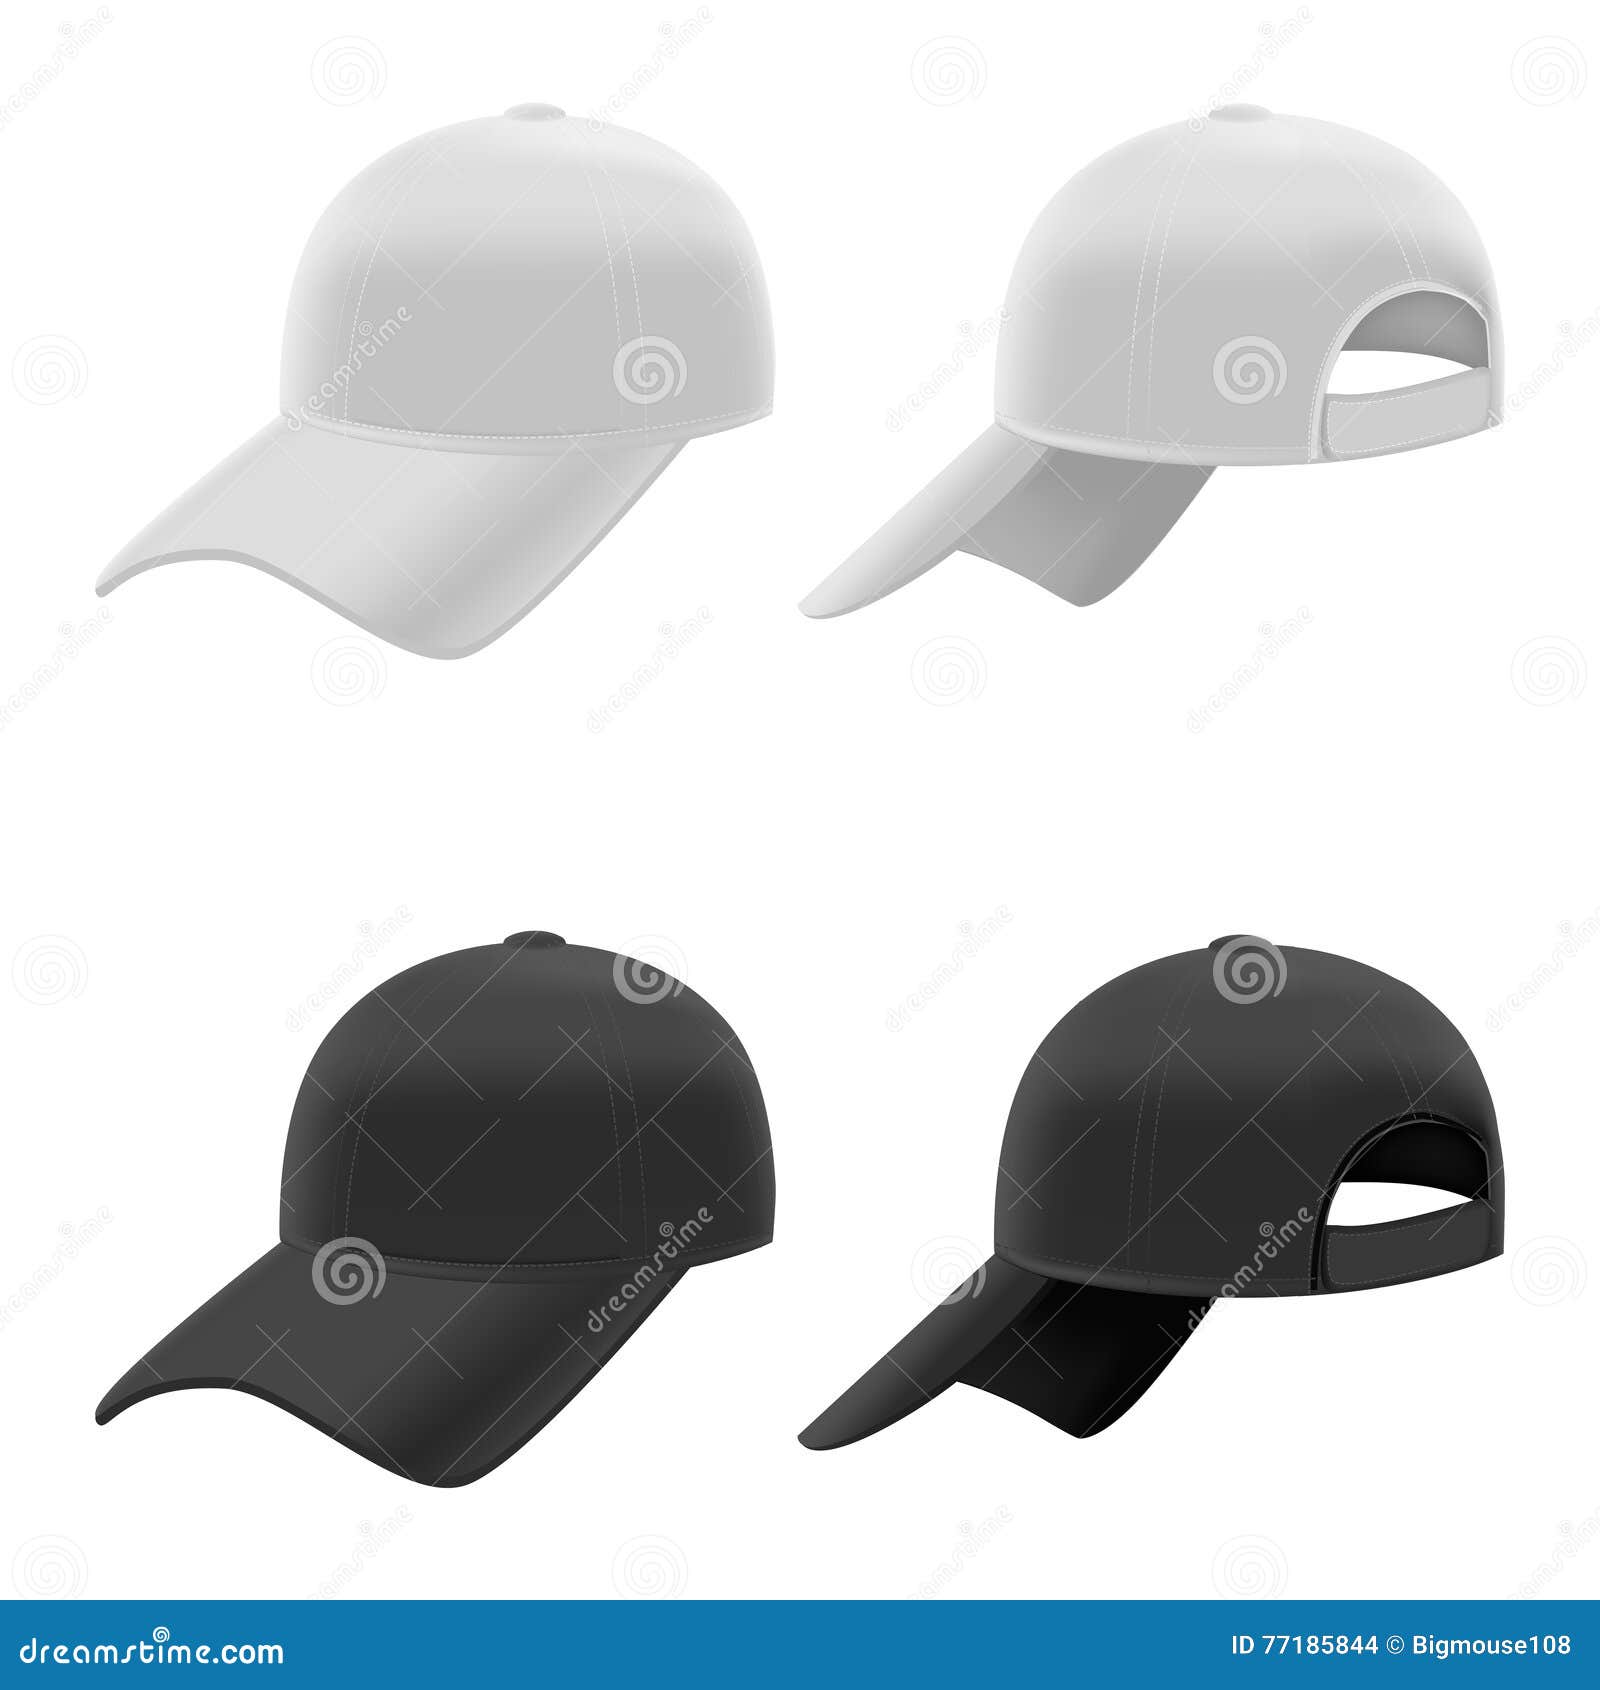 Realistic Black and White Baseball Cap Set. Vector. Realistic Black and White Baseball Cap Set on Light Background. Vector illustration